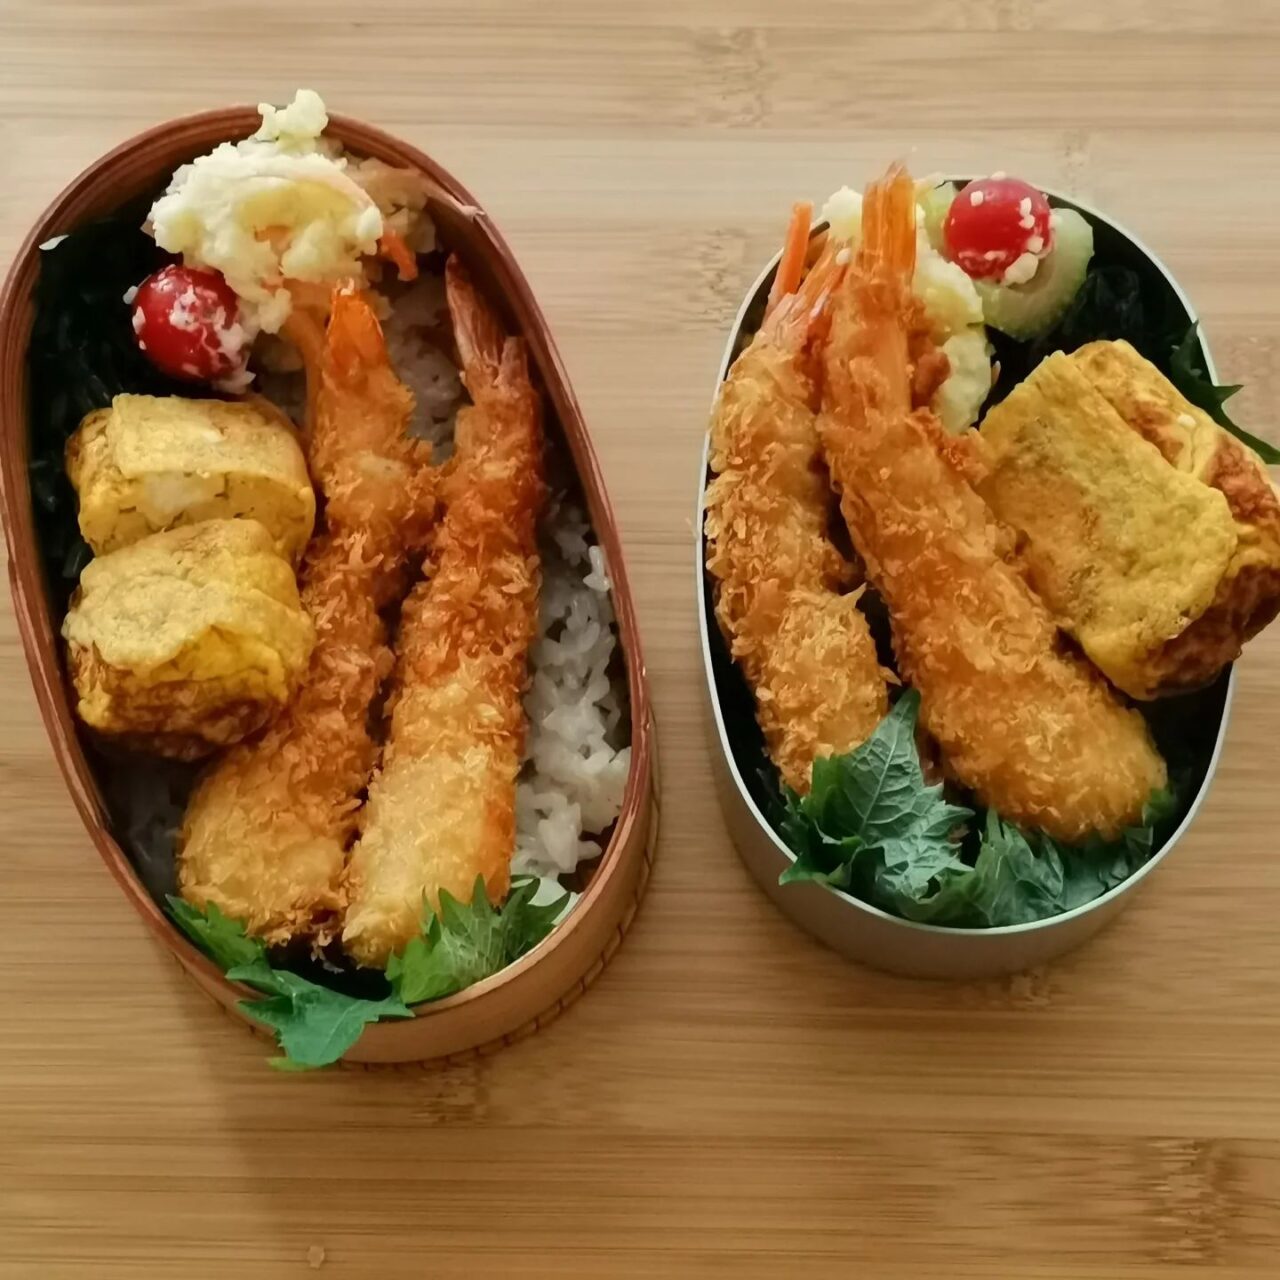 Hi there from Fukuoka Japan☔
2022/04/26
Fried shrimp 🍤
Japanese omelette
Potato salad
Boiled spinach with seaweed
#お弁当 #お弁当記録 #お弁当作り #戦争反対 #StandWithUkraine #WomenEmpowerment